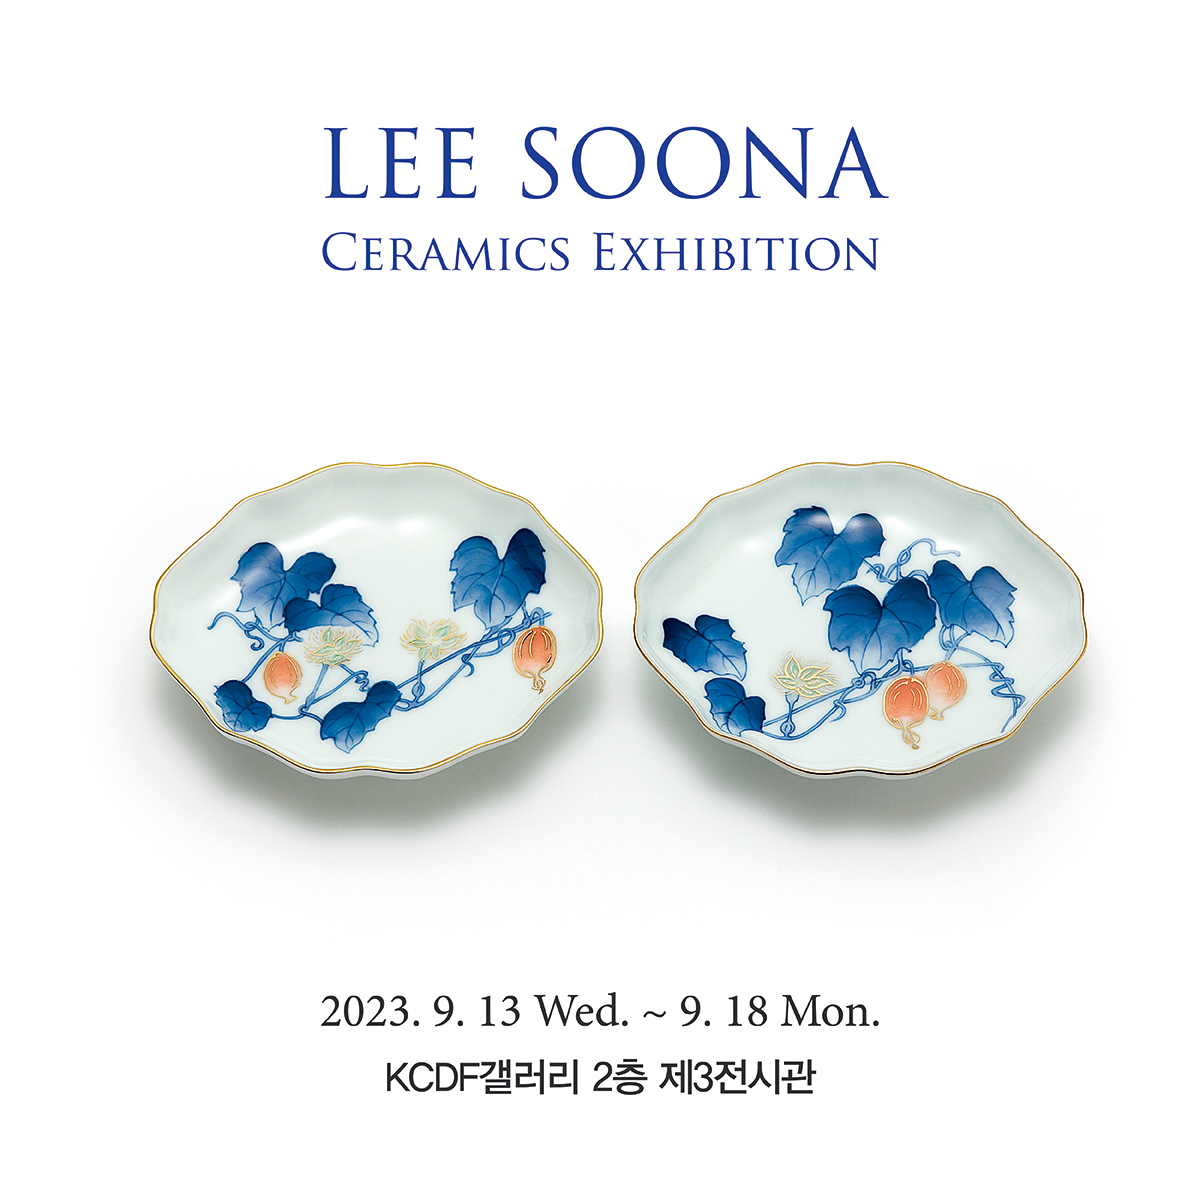 LEE SOONA CERAMICS EXHIBITION 2023.9.13 Wed. ~ 9. 18 Mon. KCDF갤러리 2층 제3전시관